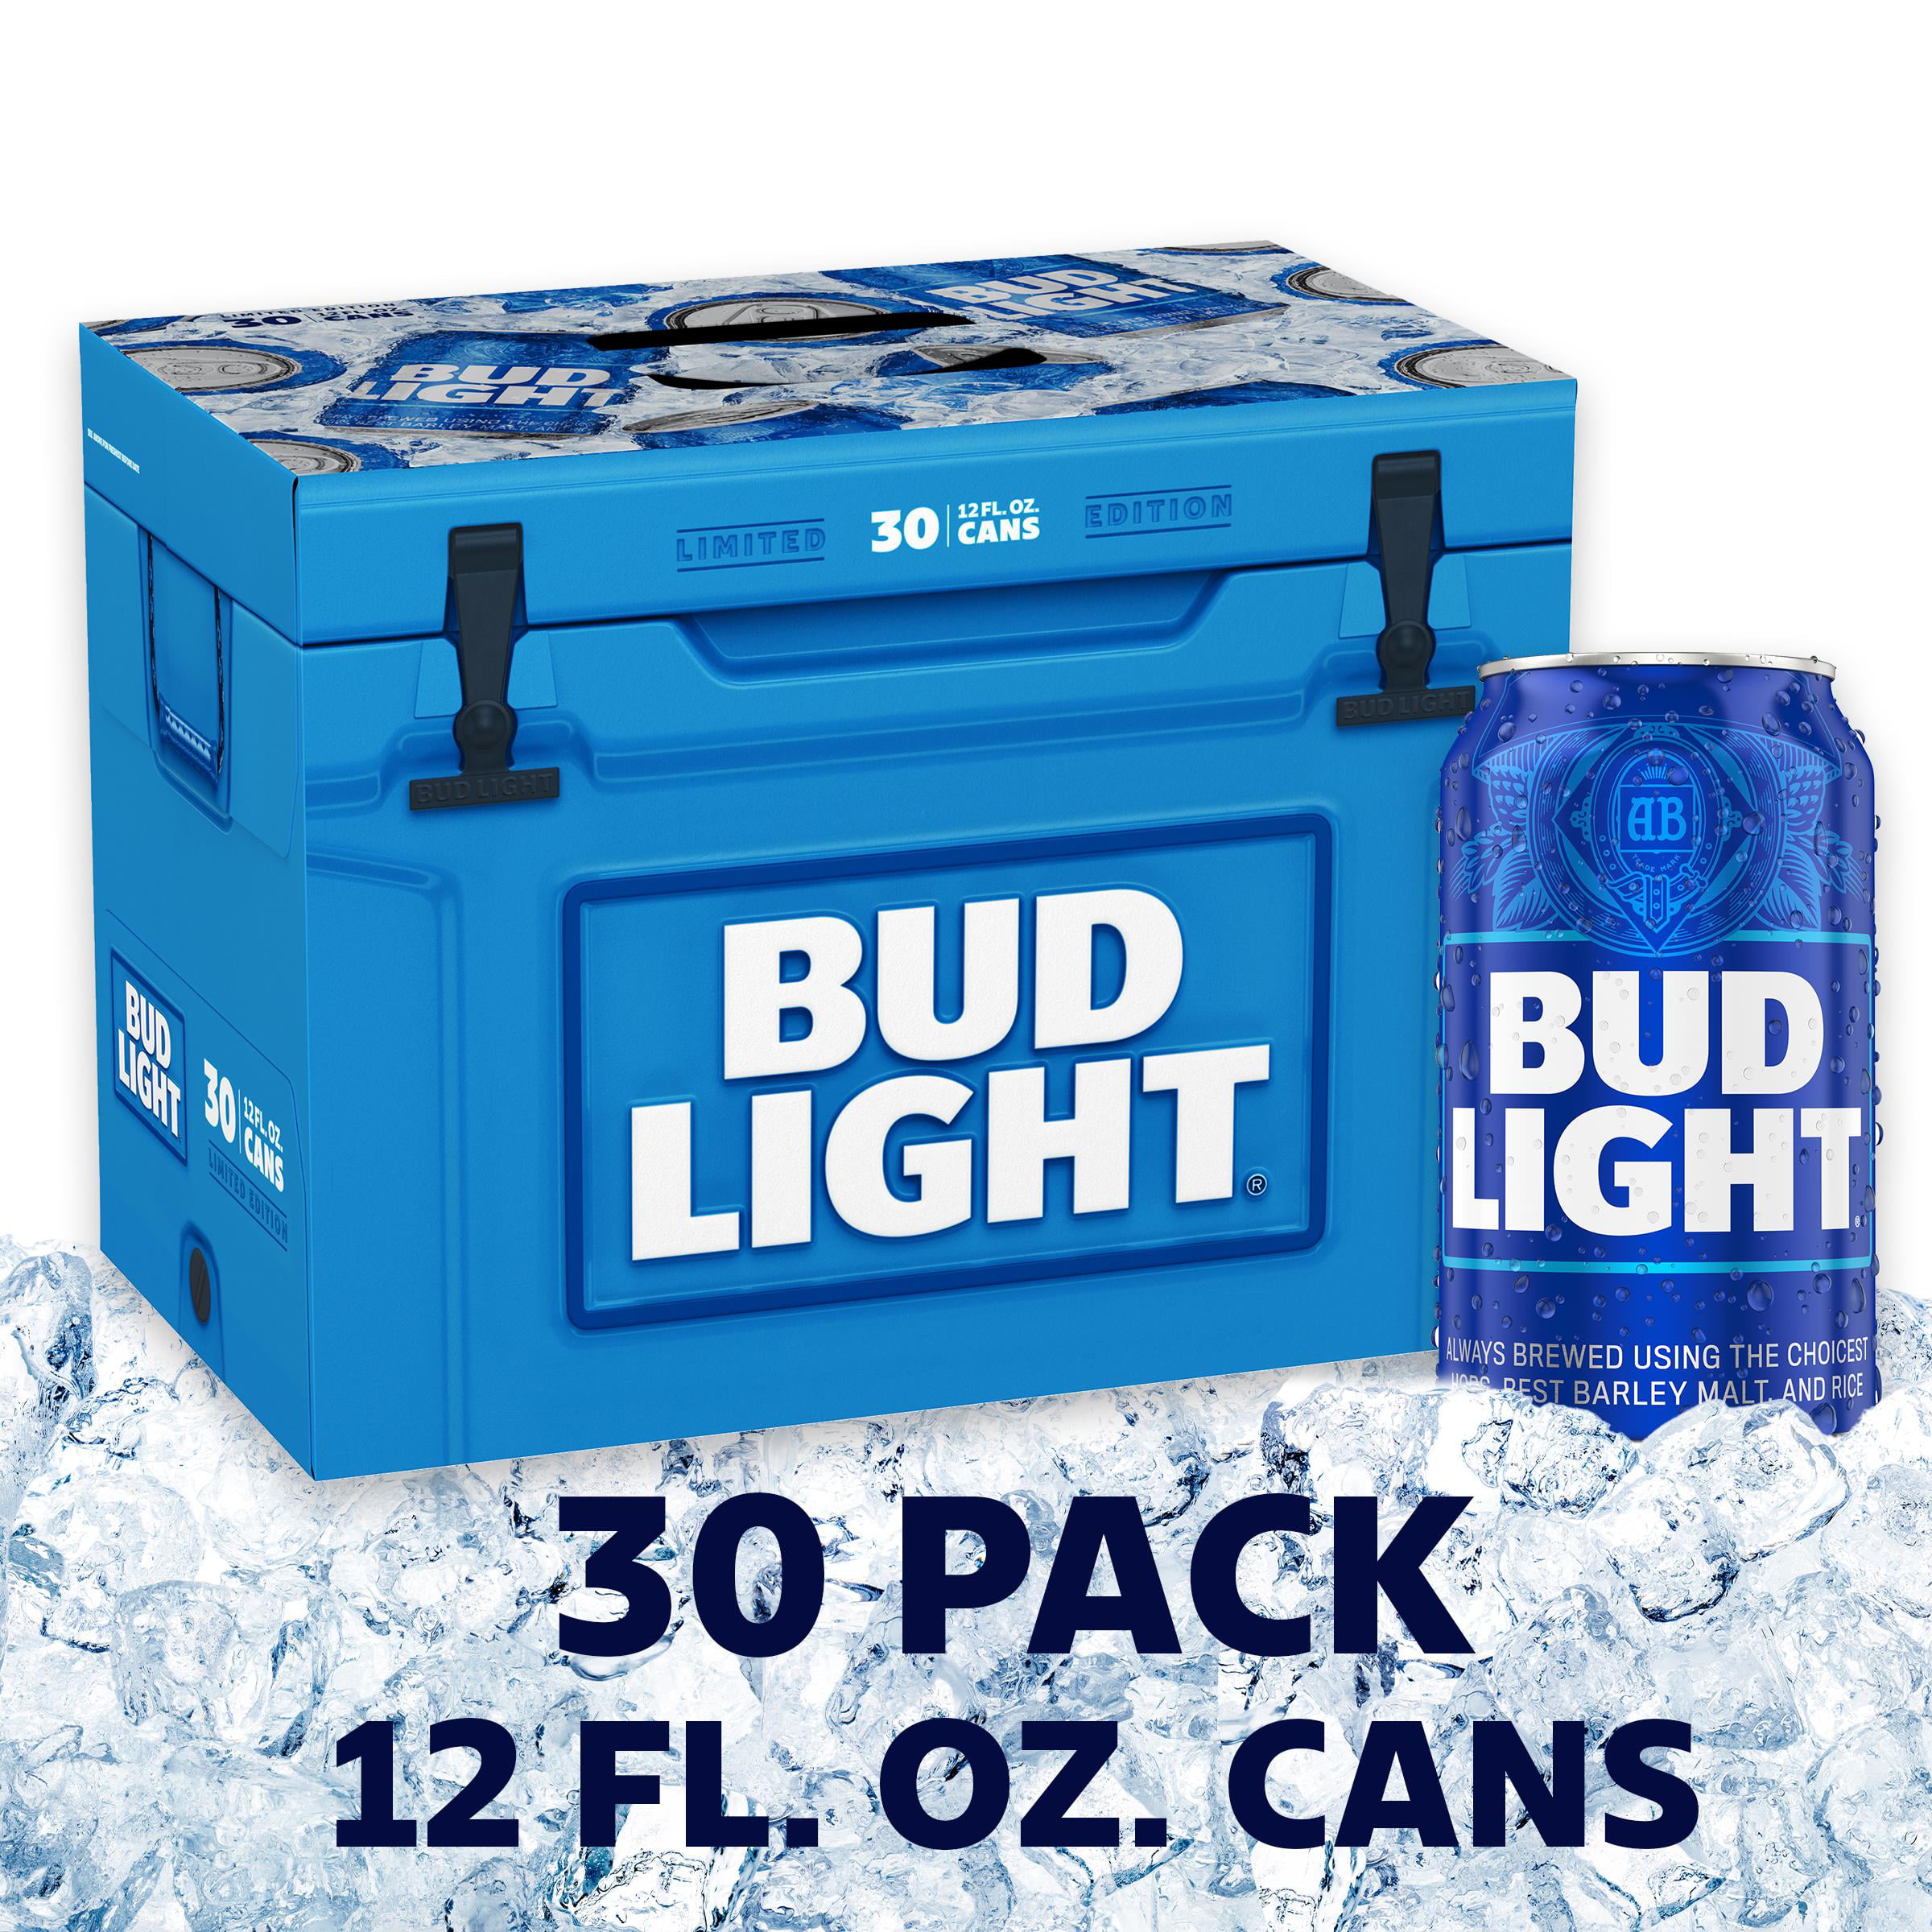 bud-light-beer-30-pack-beer-12-fl-oz-cans-walmart-walmart